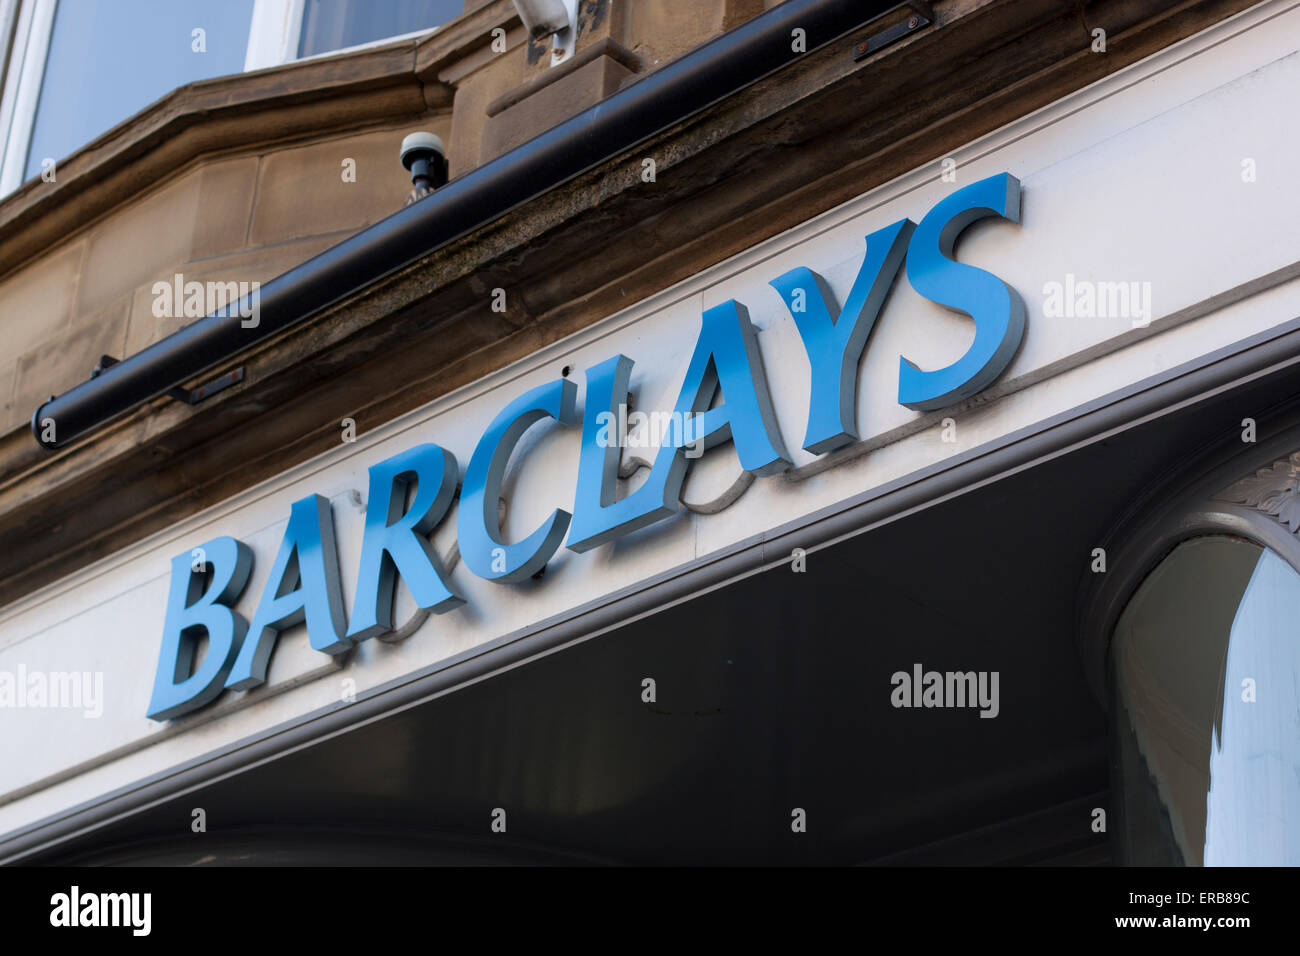 Barclays bank Shop sign Stock Photo